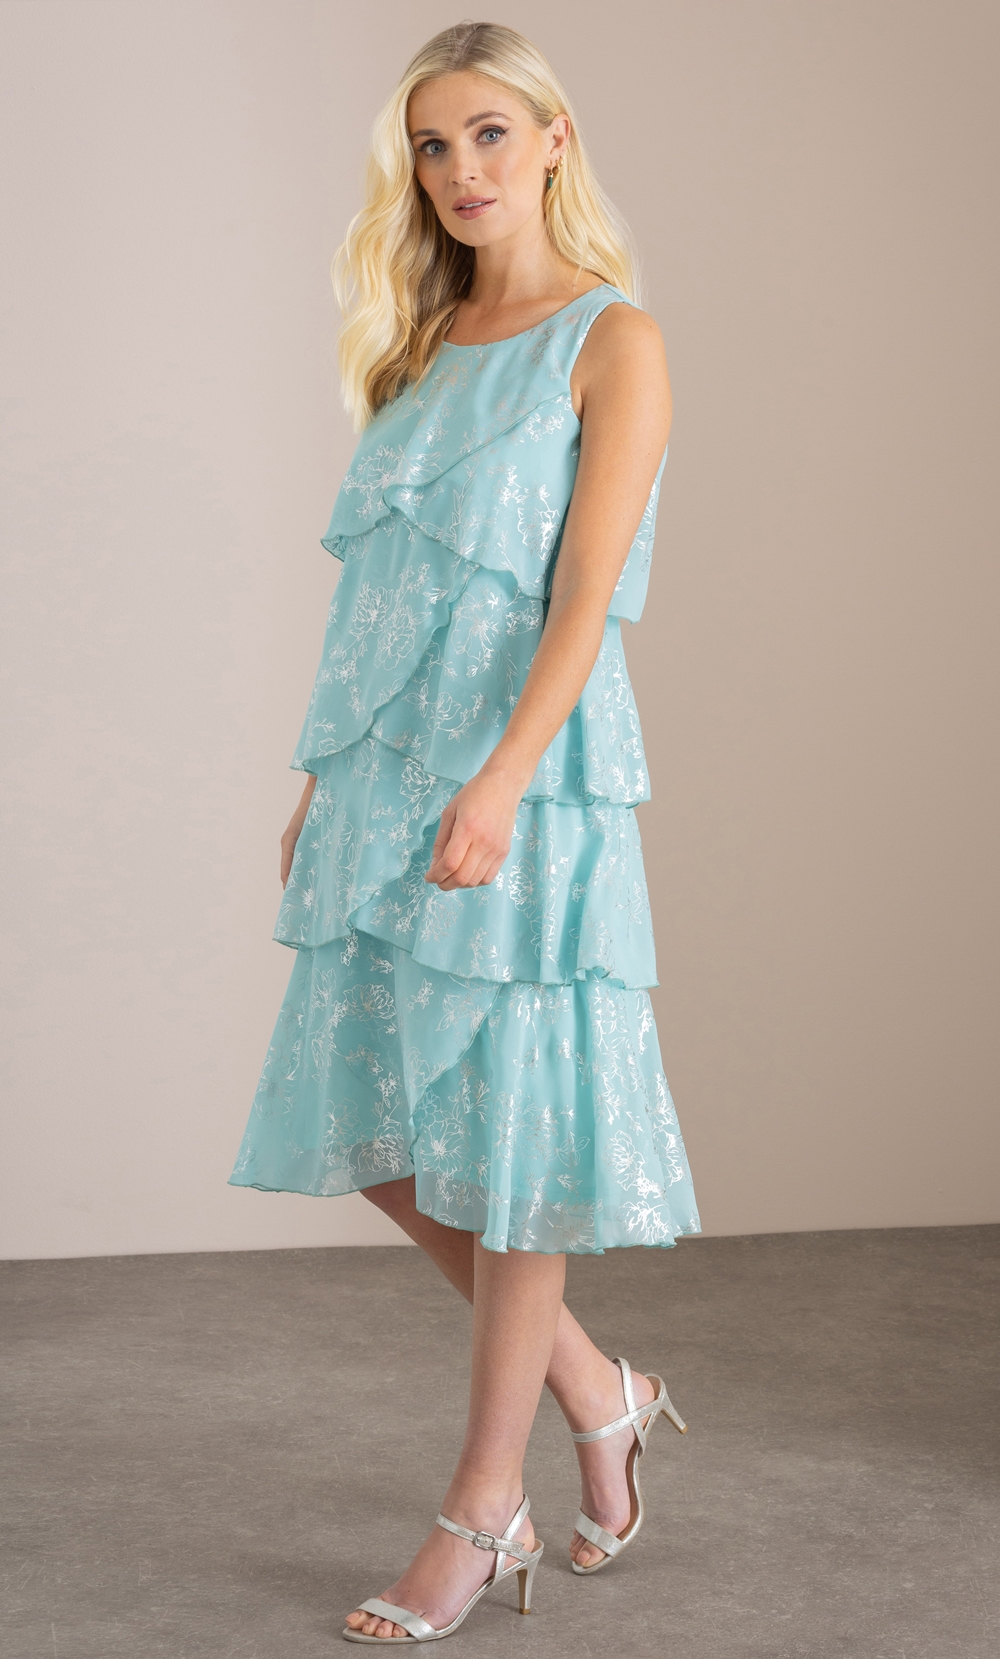 Shimmer Print Layered Dress